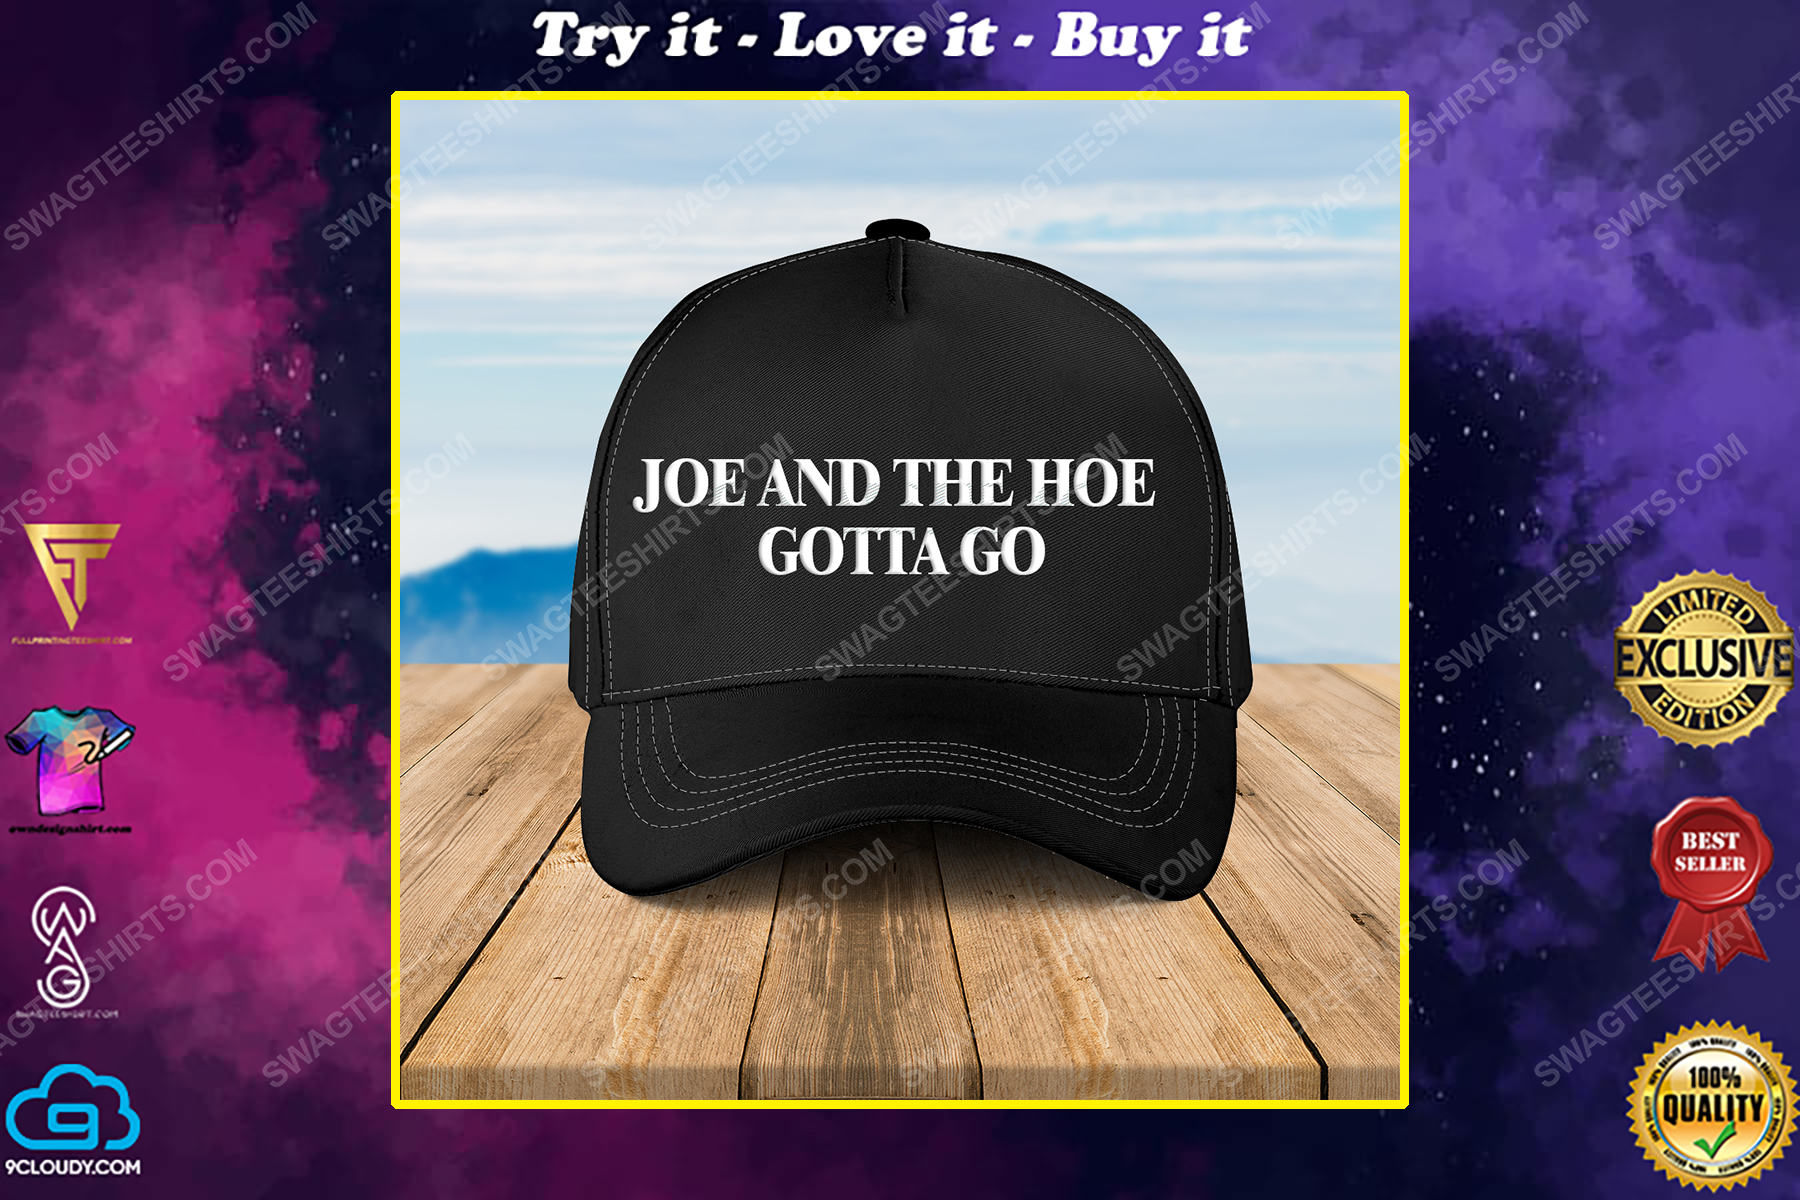 Joe and the hoe gotta go full print classic hat